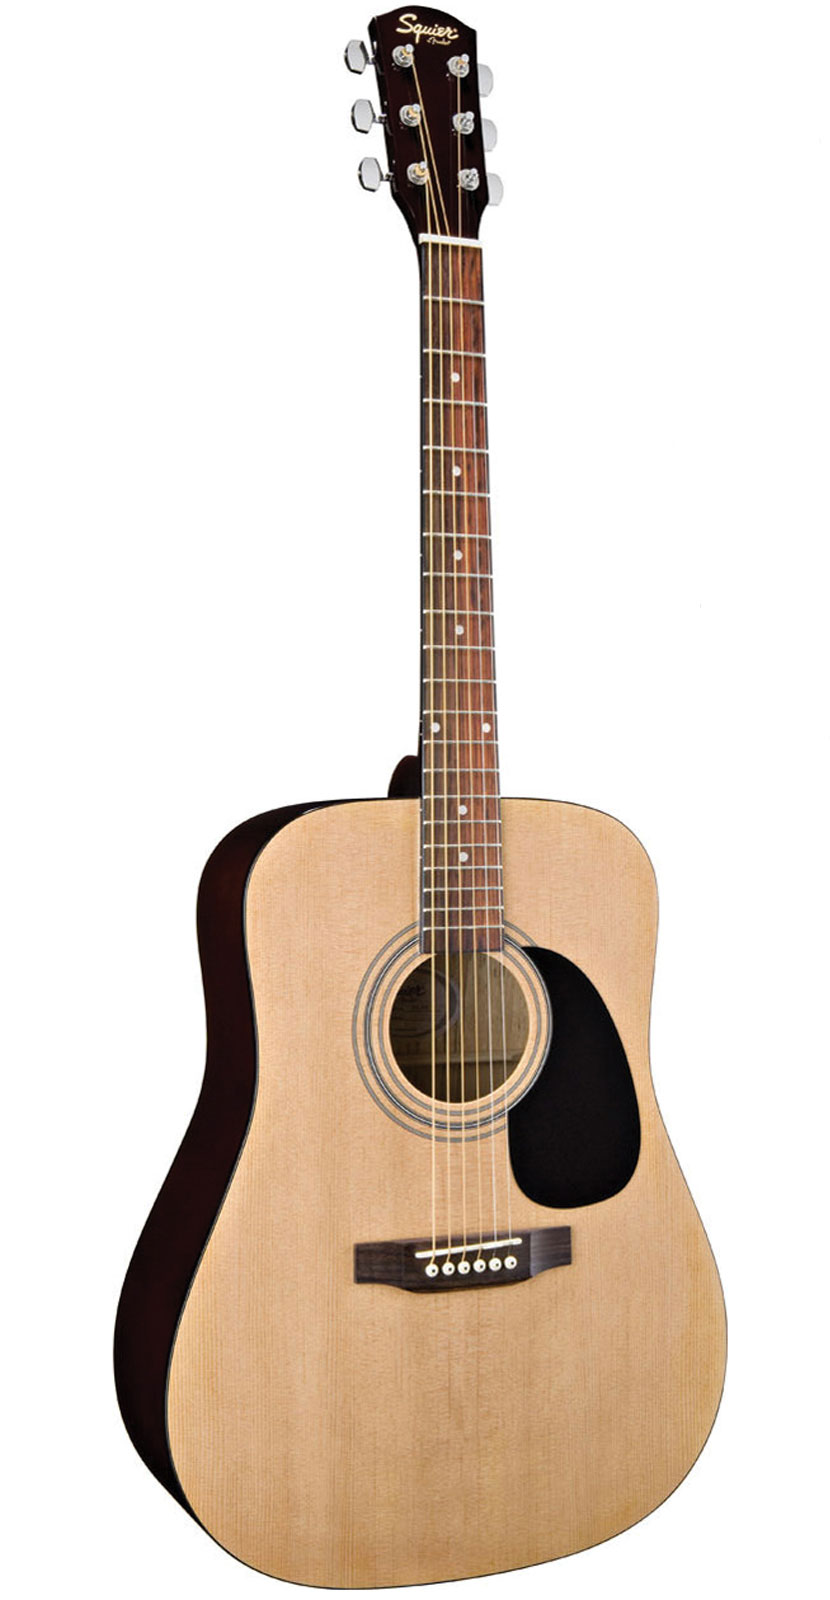 FENDER SQUIER SA-105 NATURAL PACK набор: акустическая гитара с аксессуарами